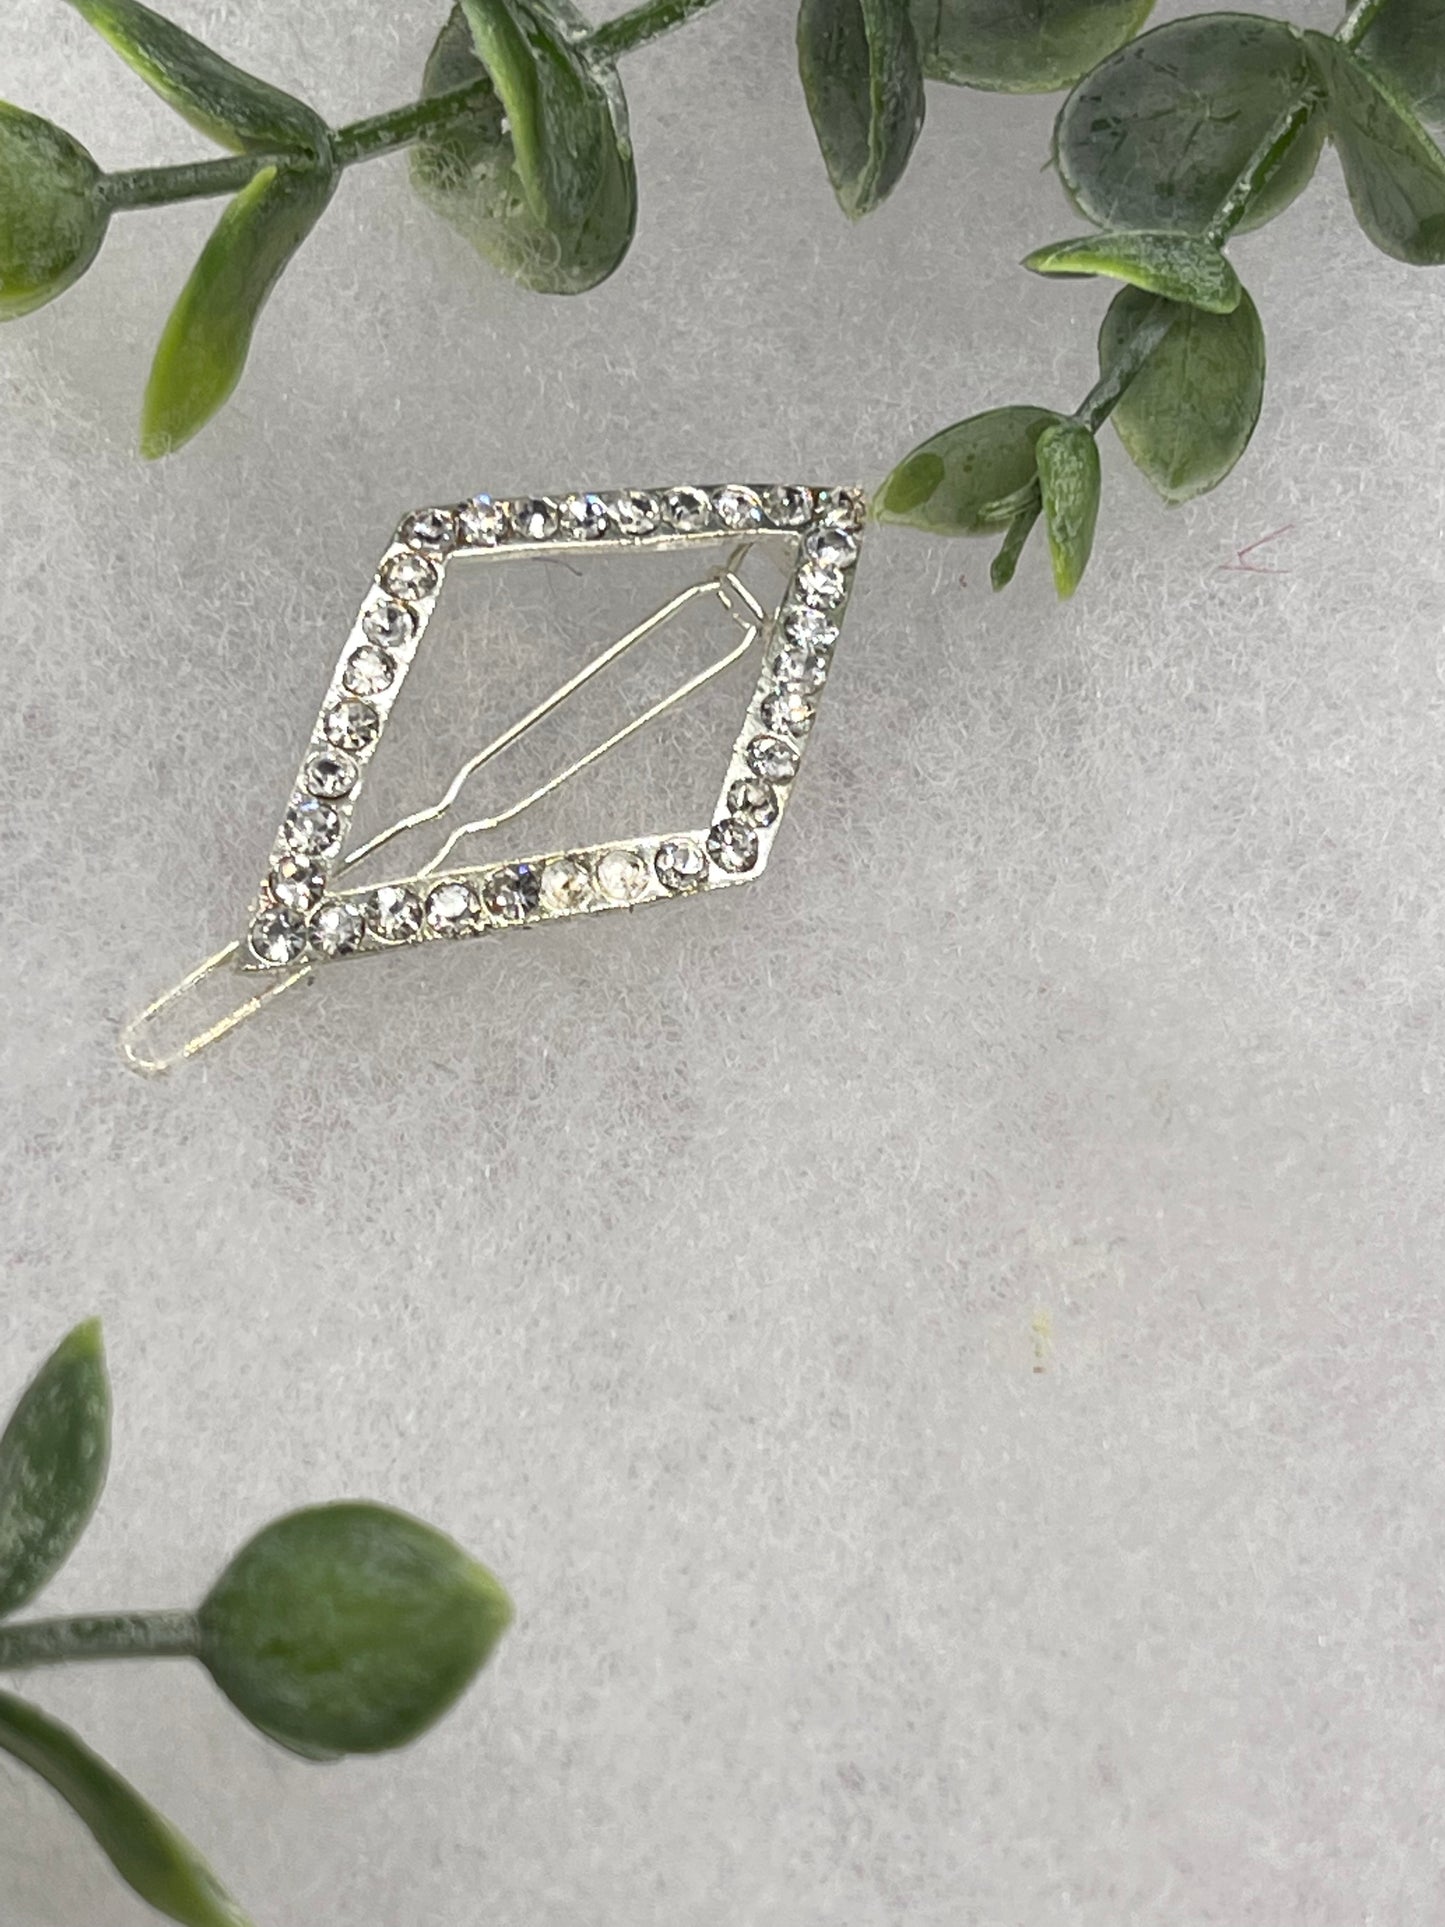 Clear Crystal Rhinestone  Hair clip  approximately 2.0” silver tone formal hair accessory gift wedding bridal Hair accessory